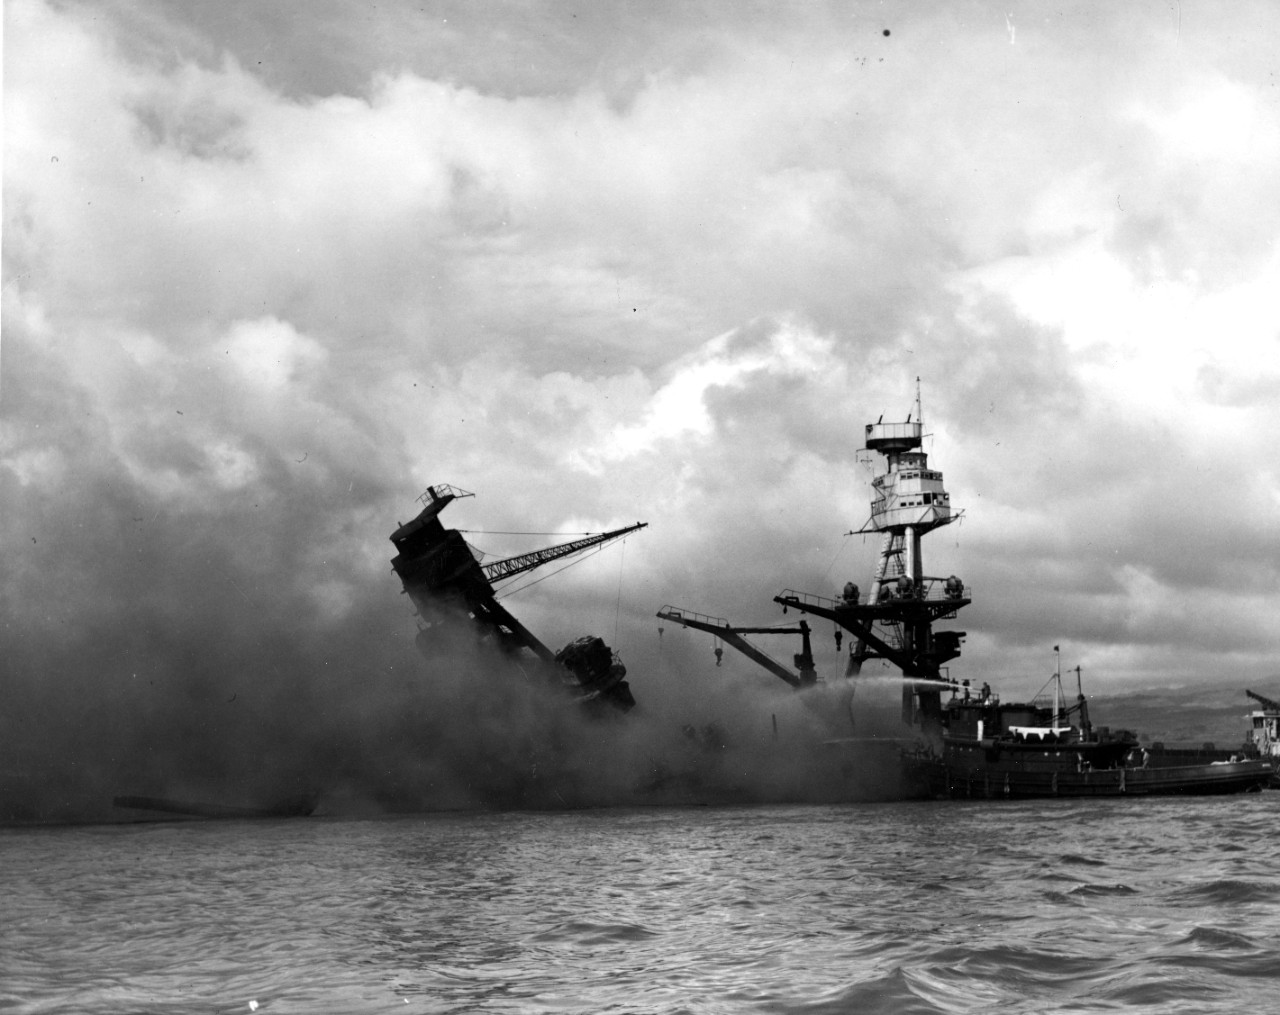 80-G-19942 Pearl Harbor Attack, 7 December 1941